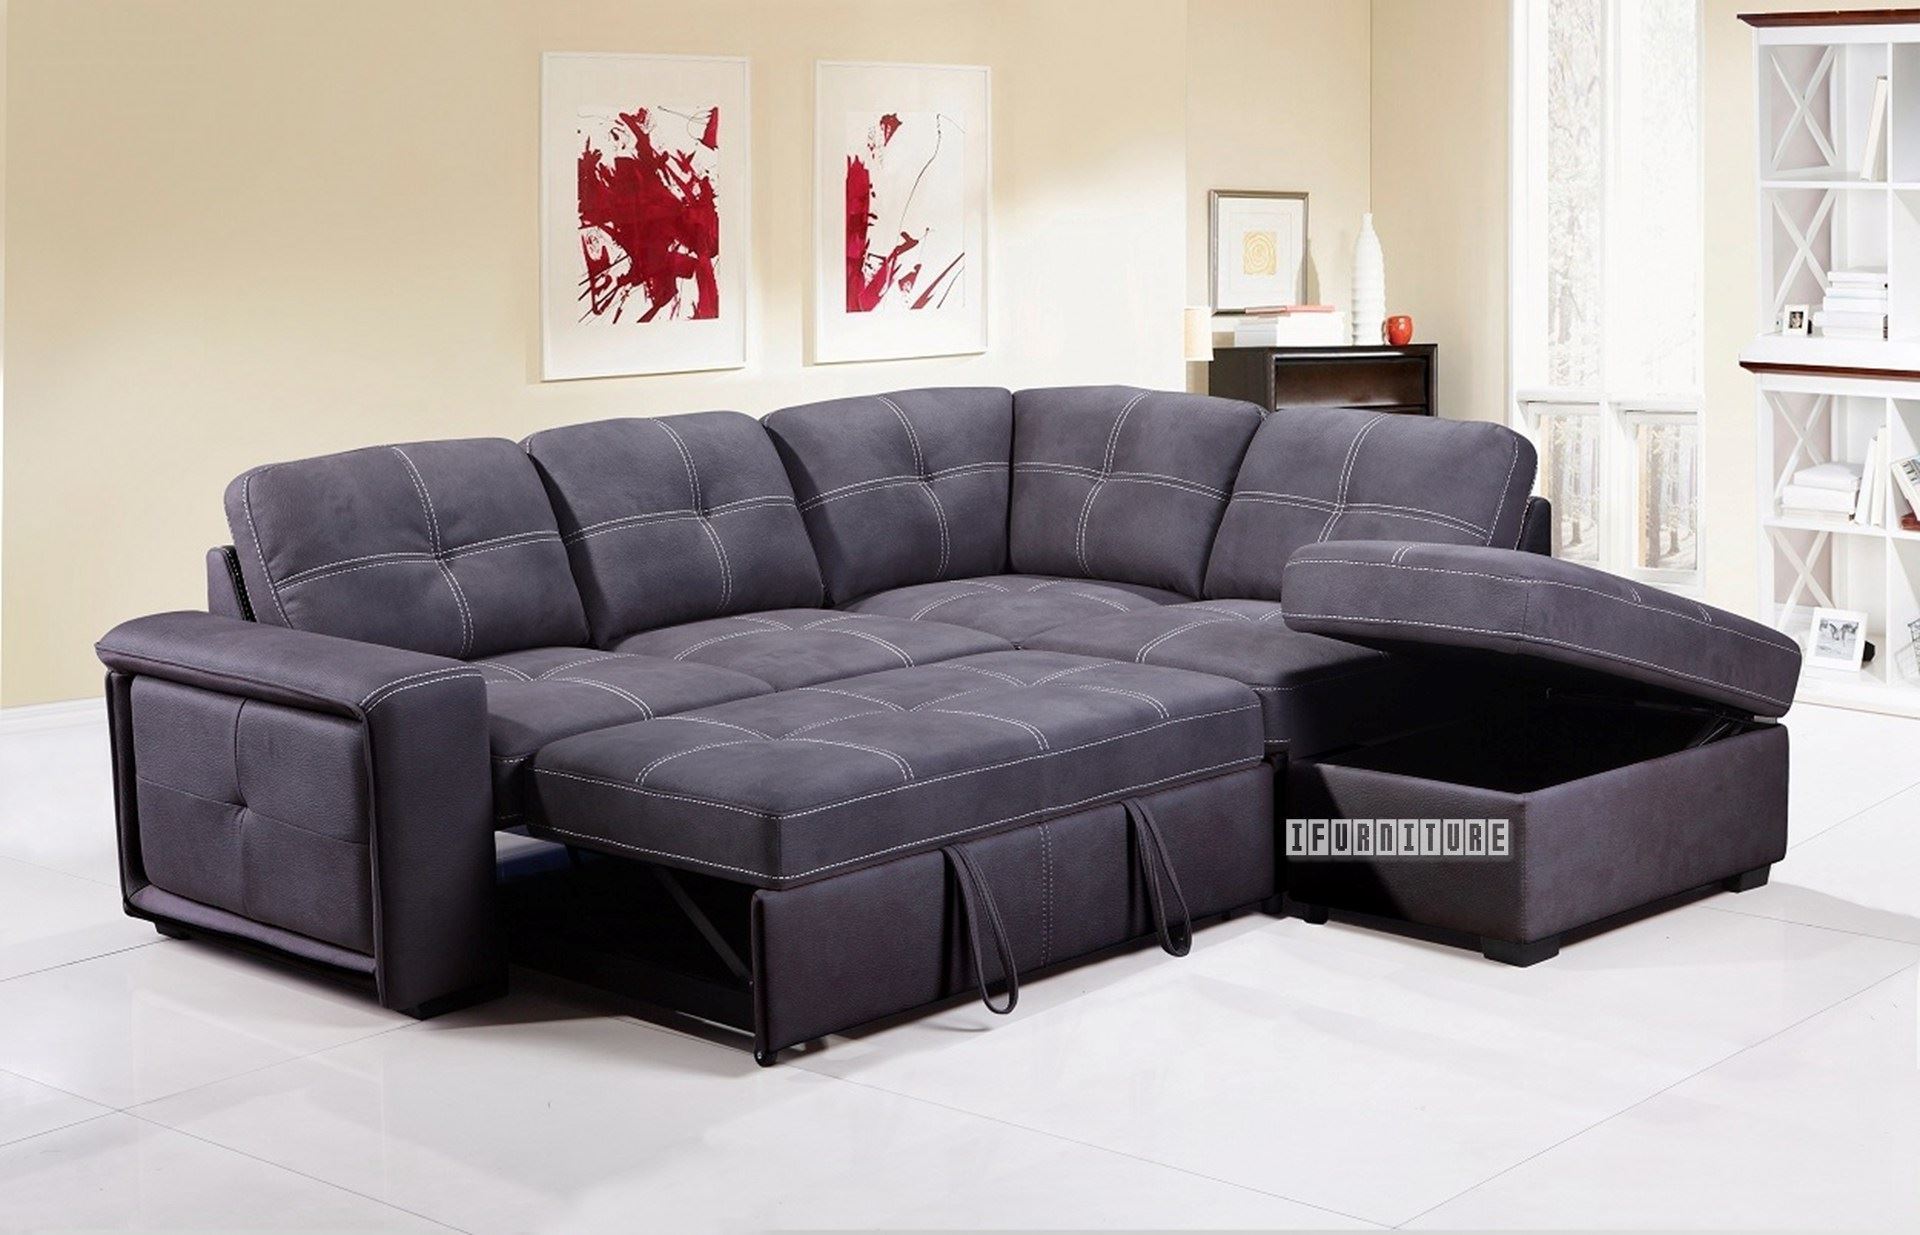 gray sectional sleeper sofa bed